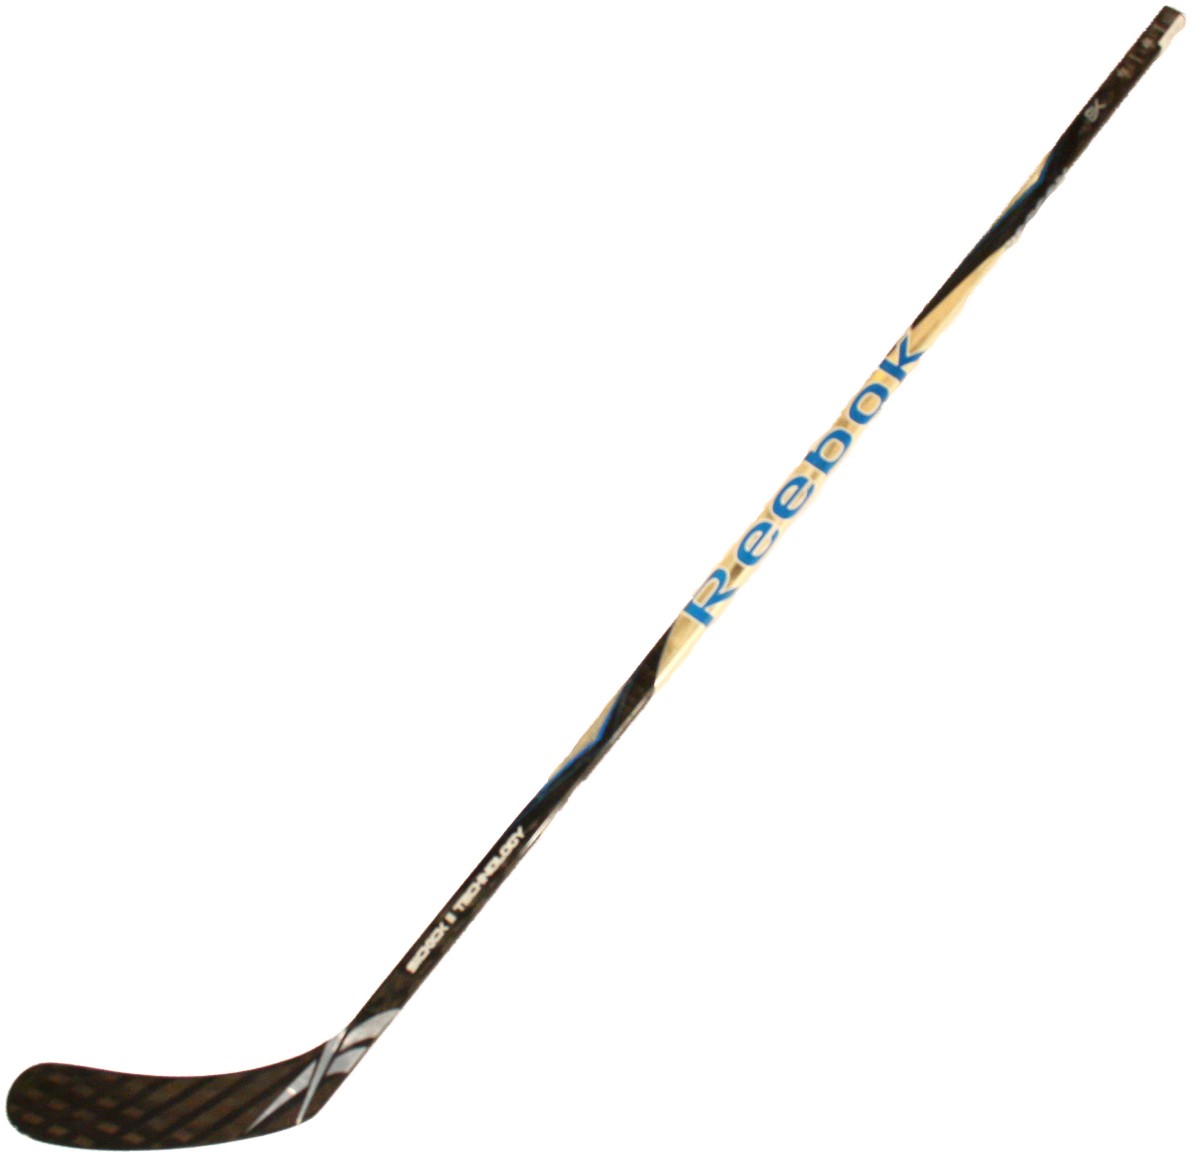 Reebok 8K Intermediate Composite Hockey Stick